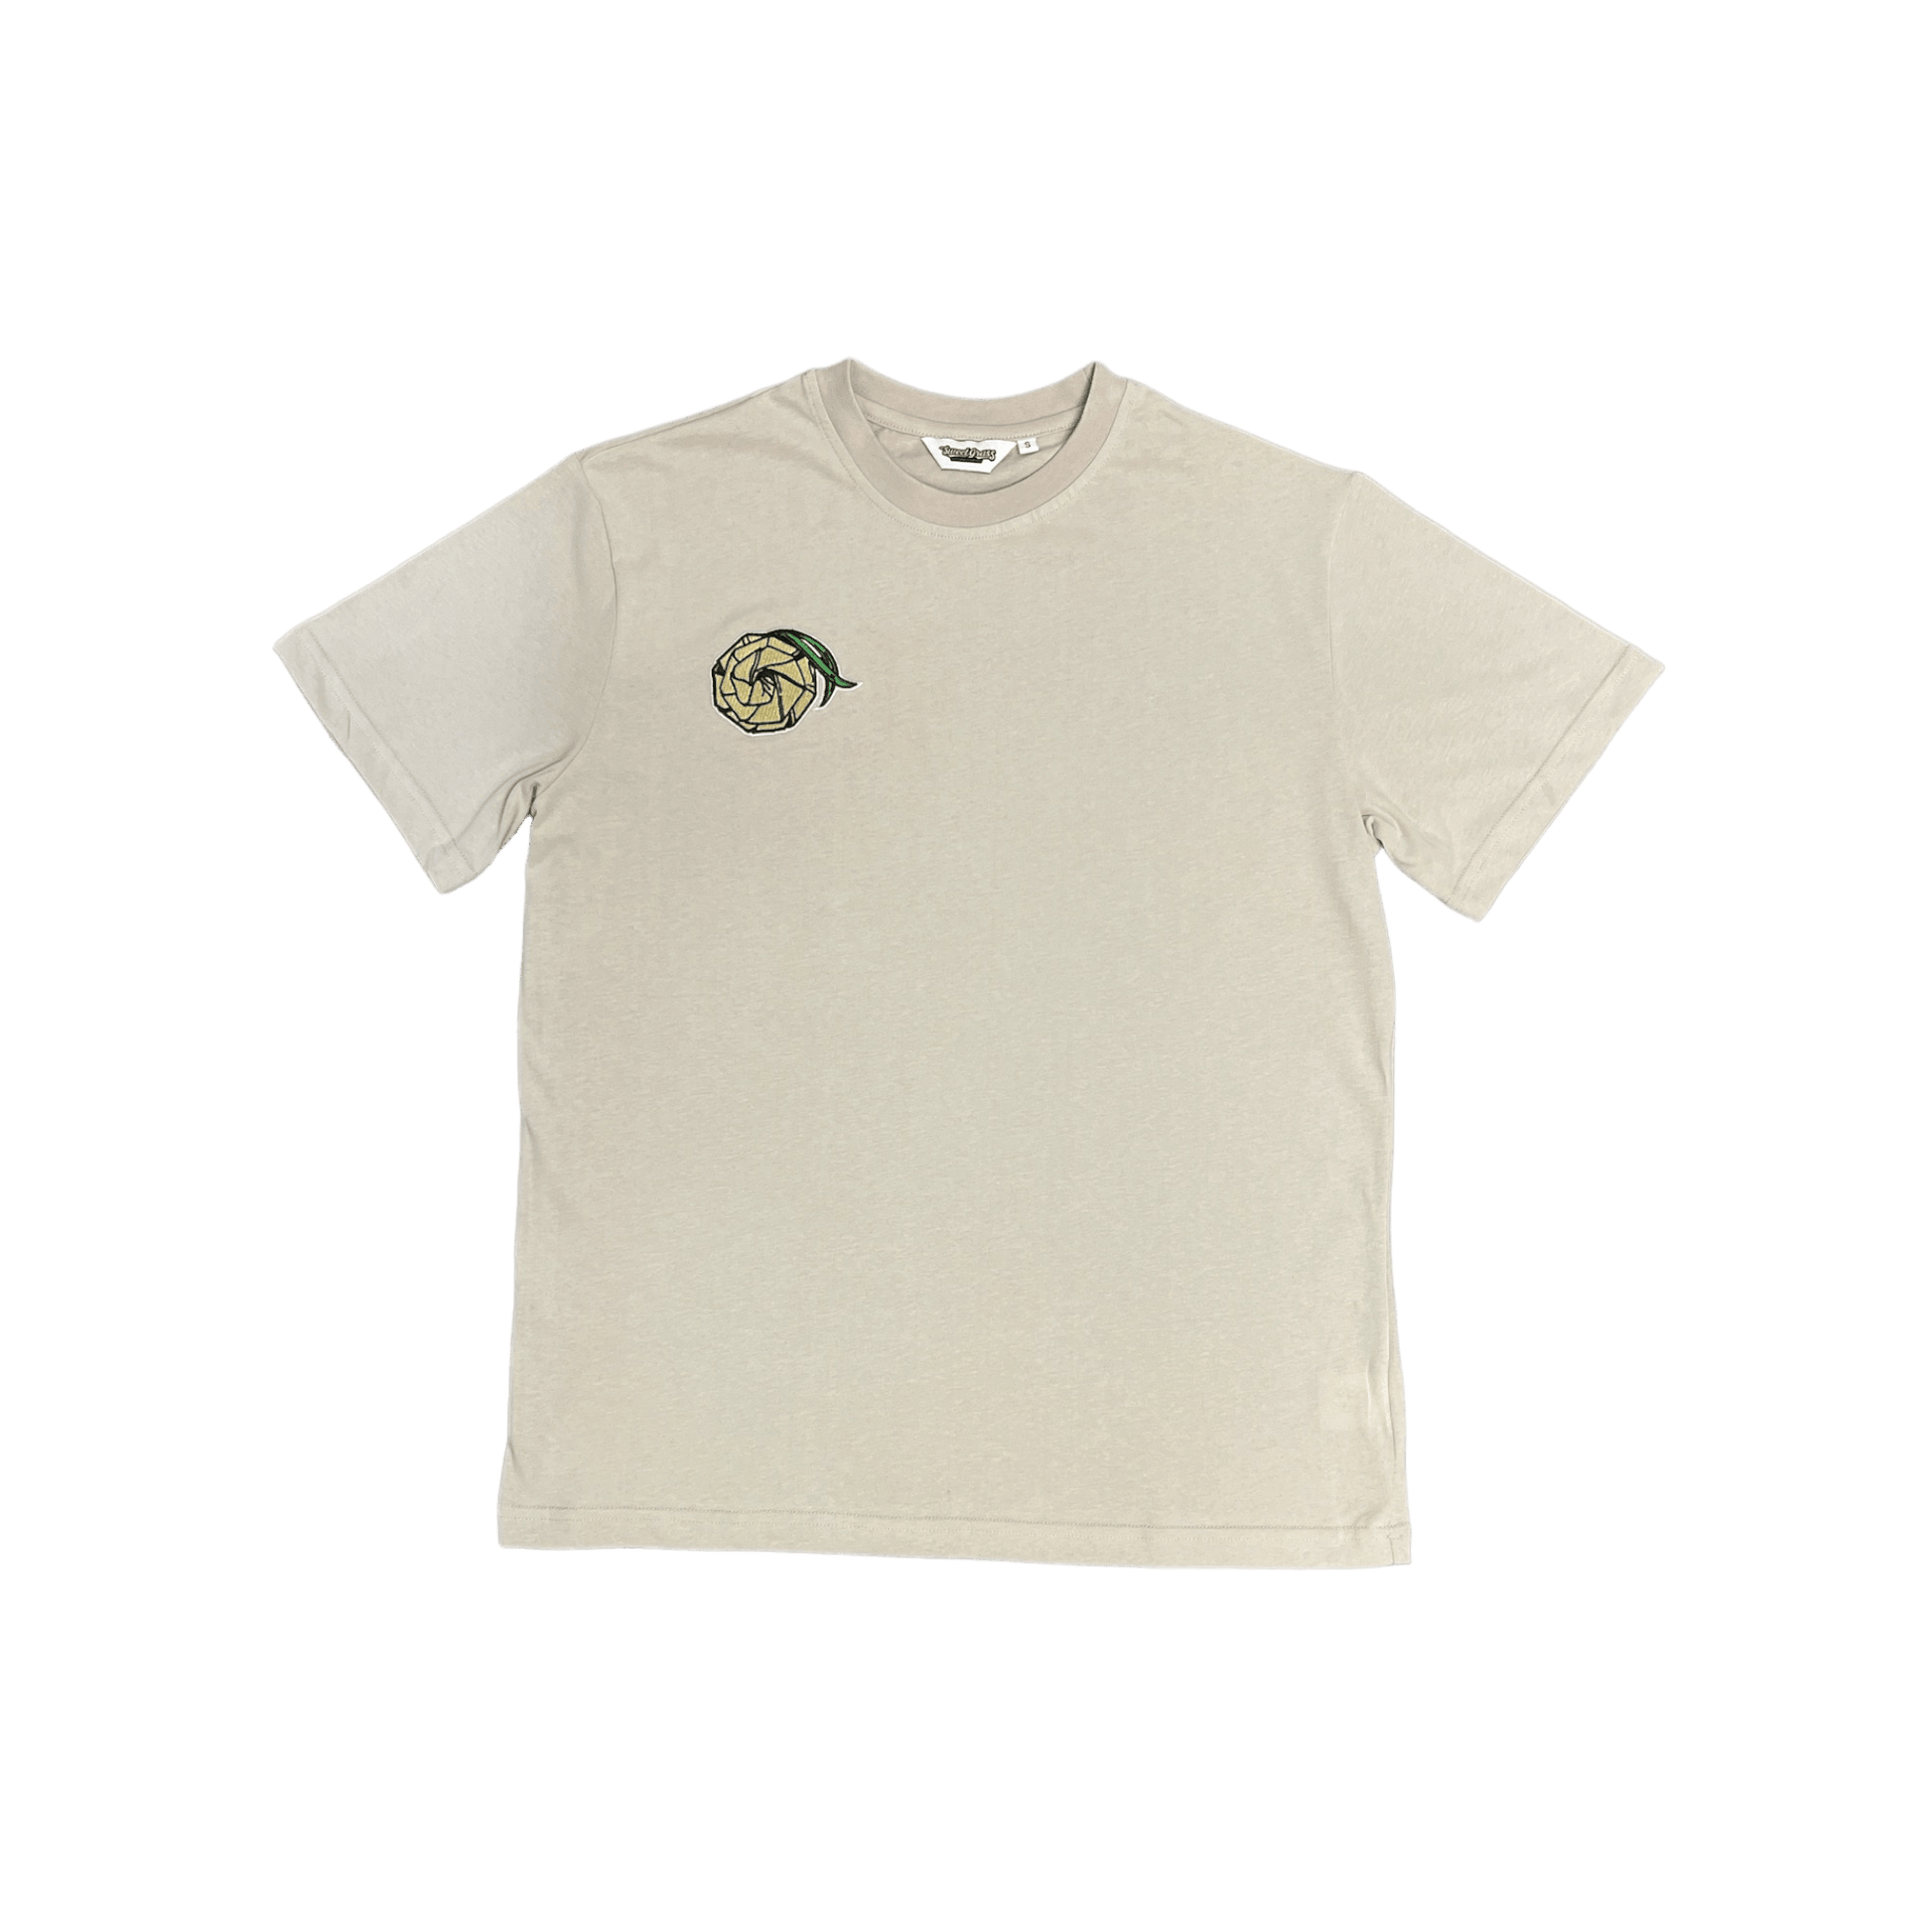 T-shirt (Tan) - SweetGrass Clothing Company